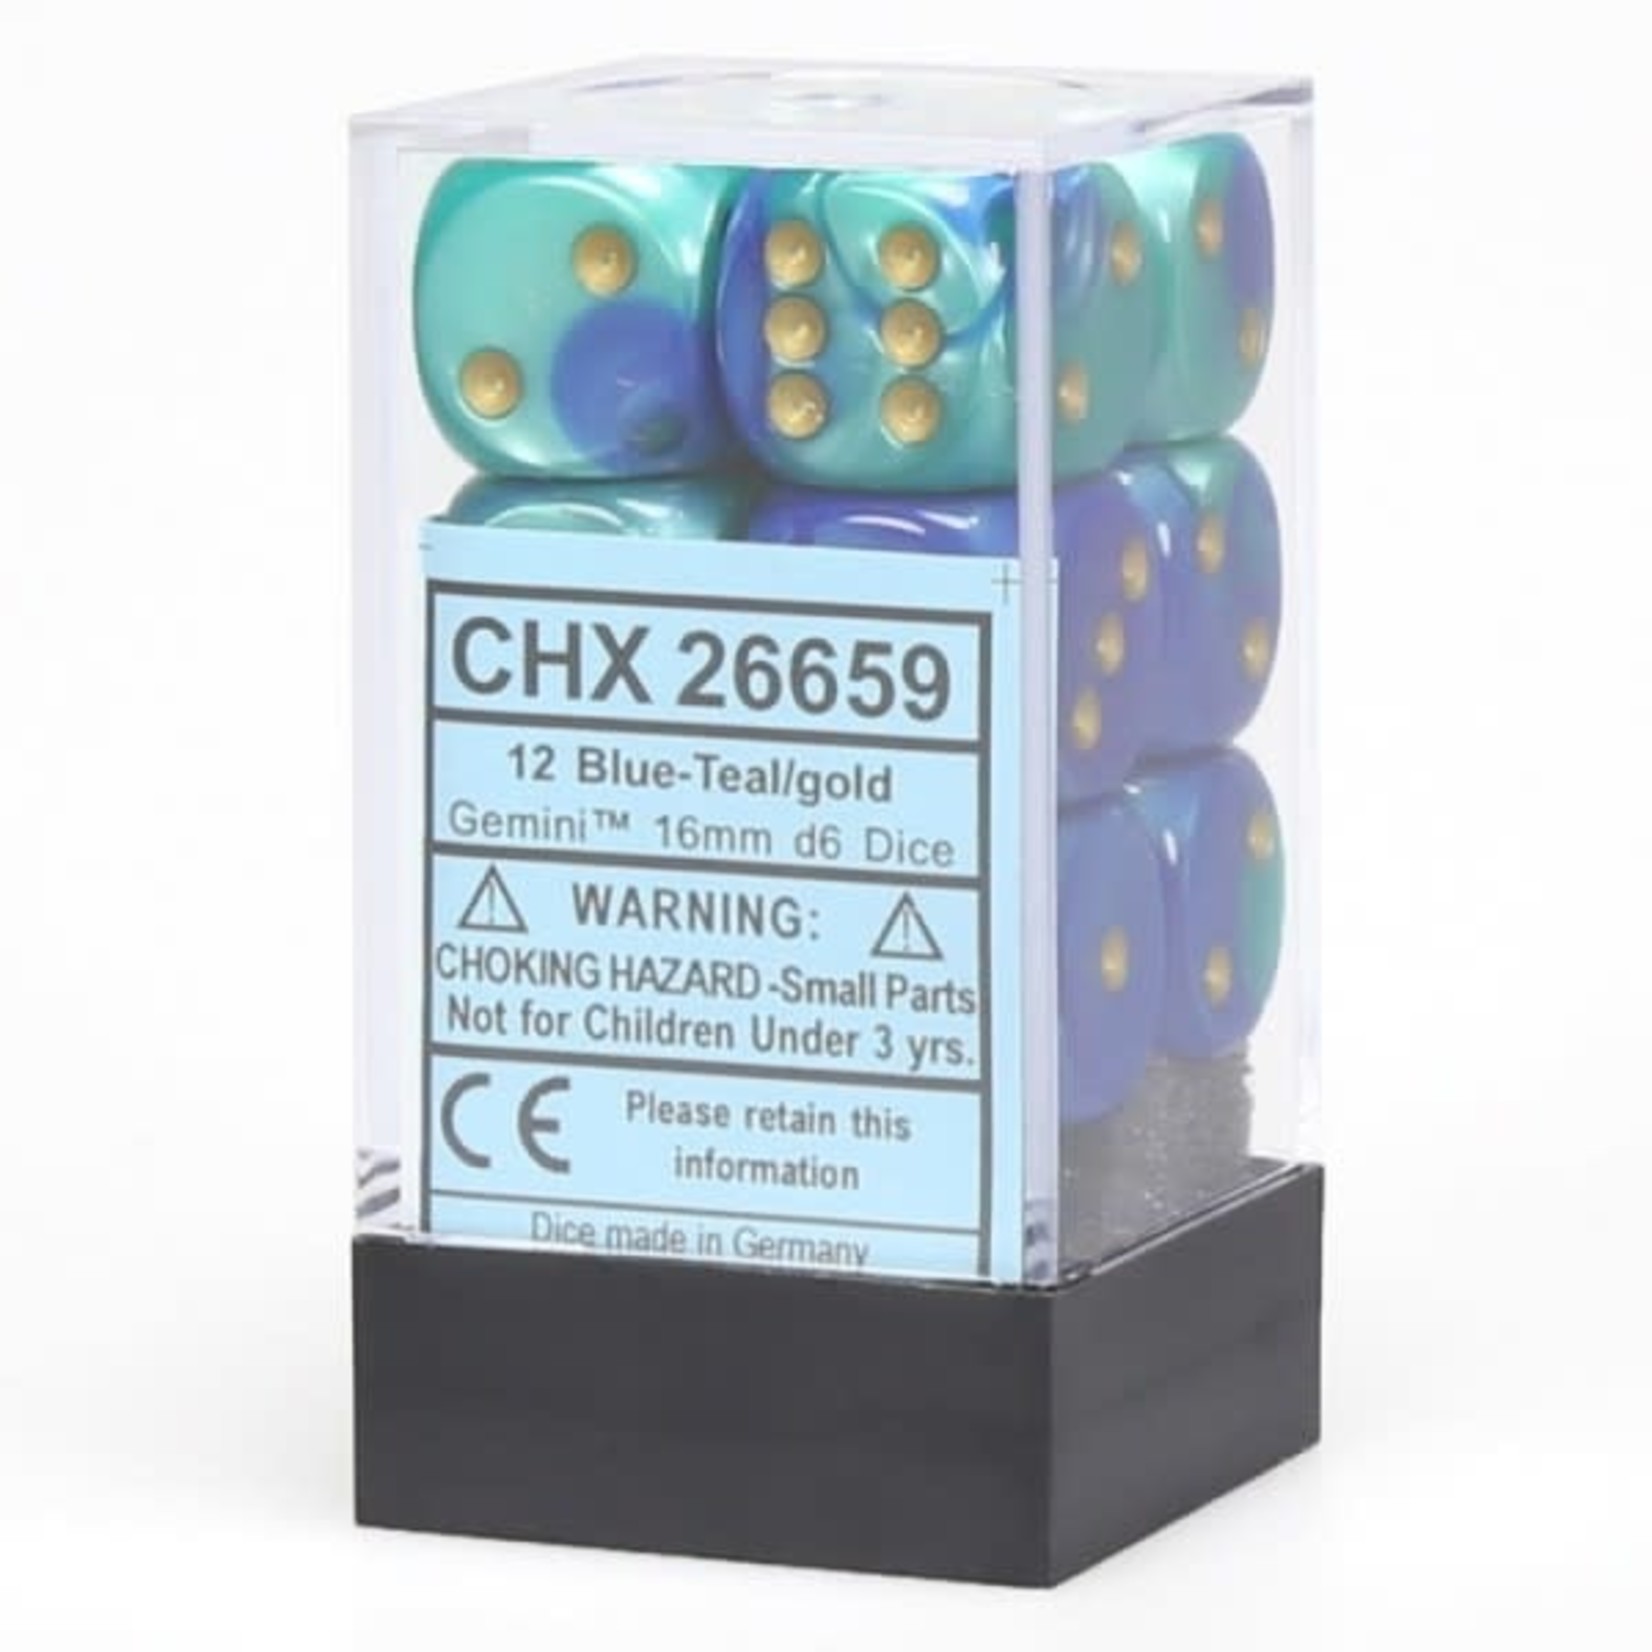 Chessex Gemini Blue Teal w/gold 16mm d6 dice (12)